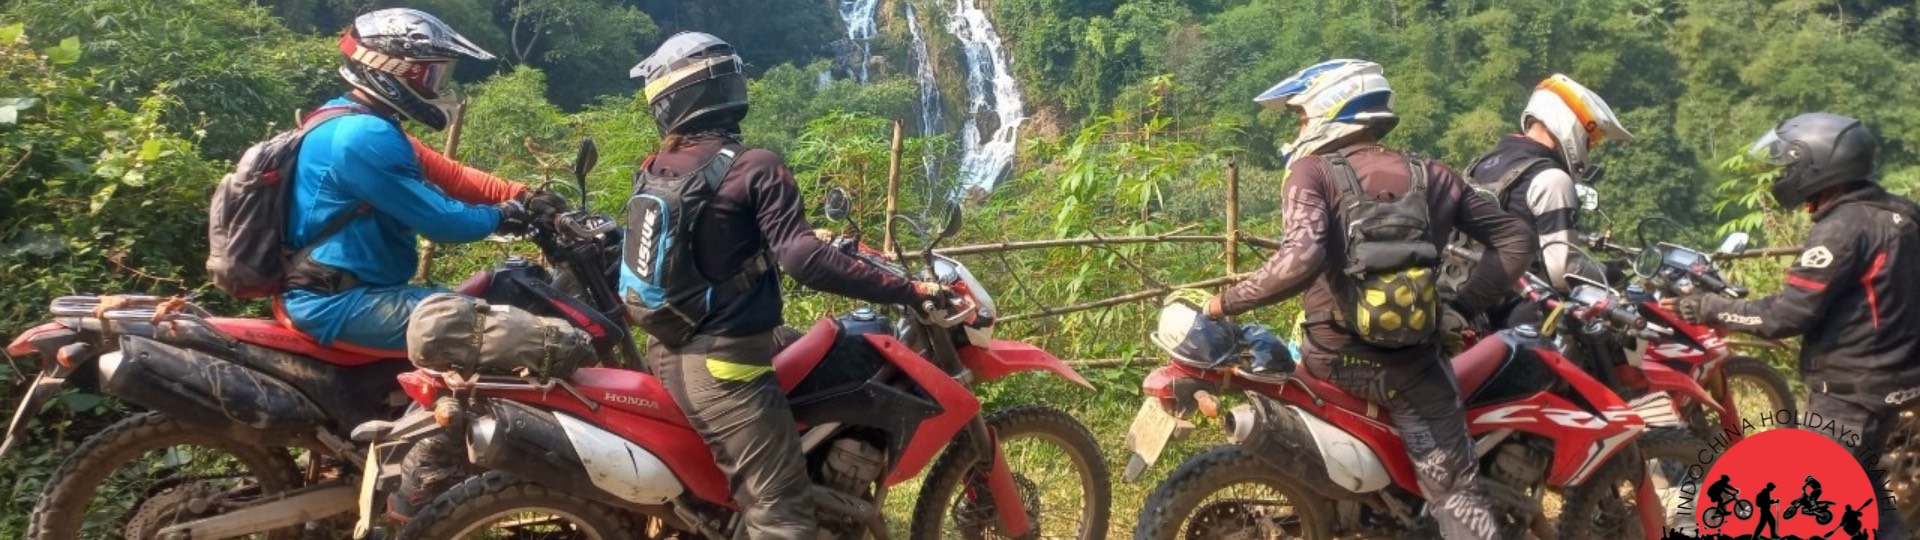 Myanmar Motorcycle Tours 1